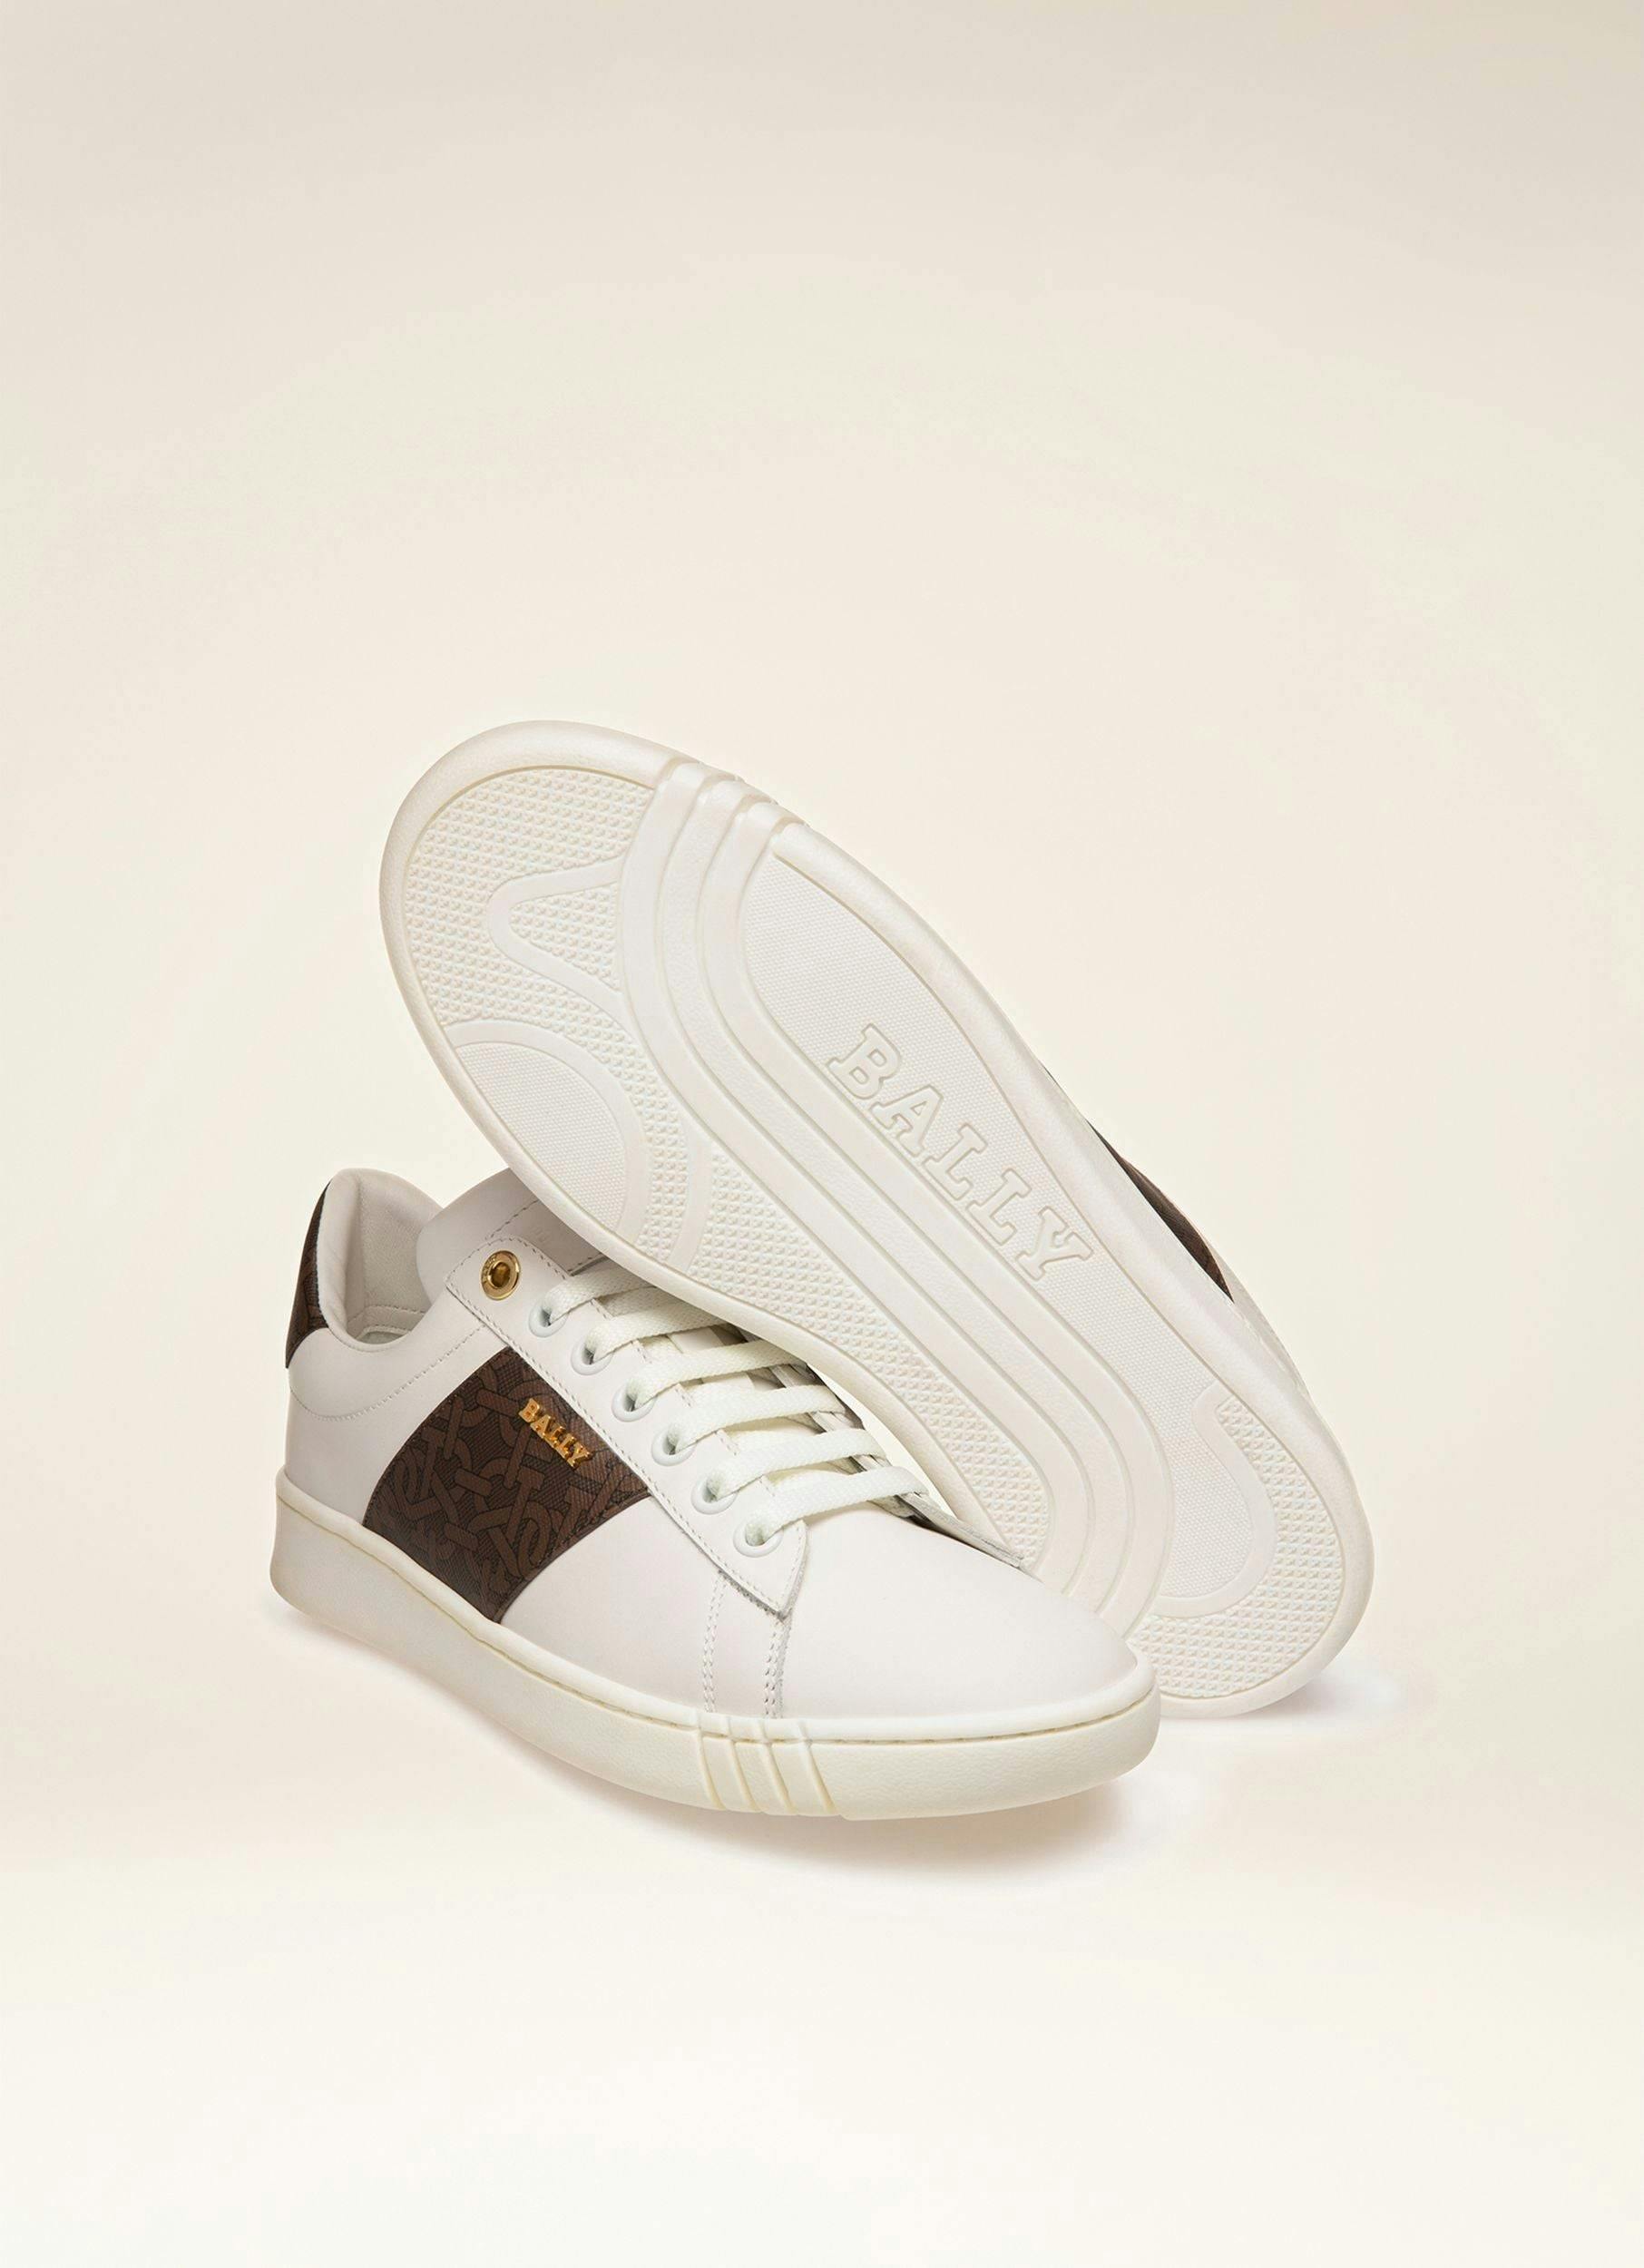 WILSON Leather Sneakers In White - Women's - Bally - 07